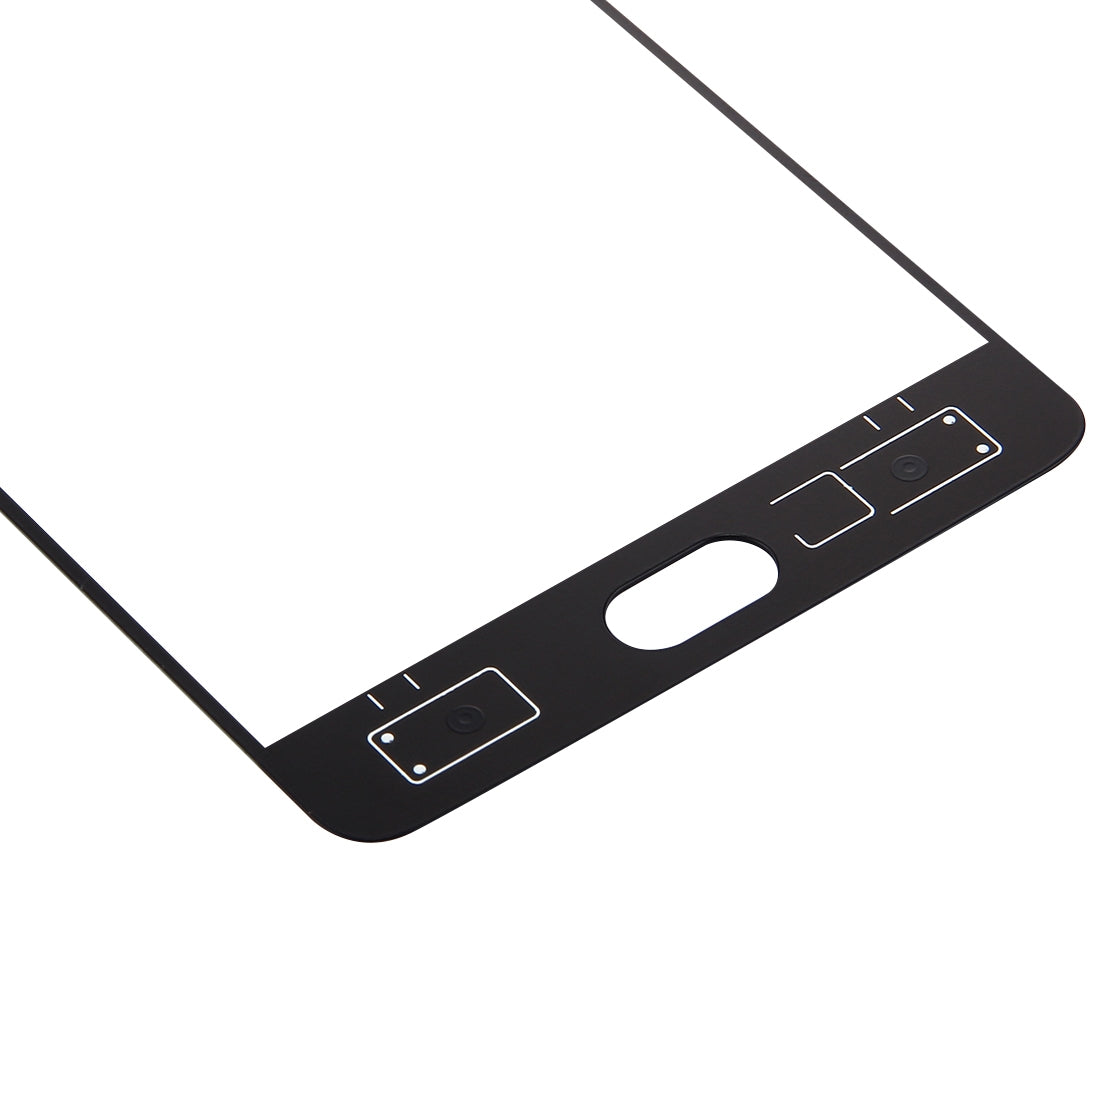 Front Screen Glass + OCA Adhesive OnePlus 5